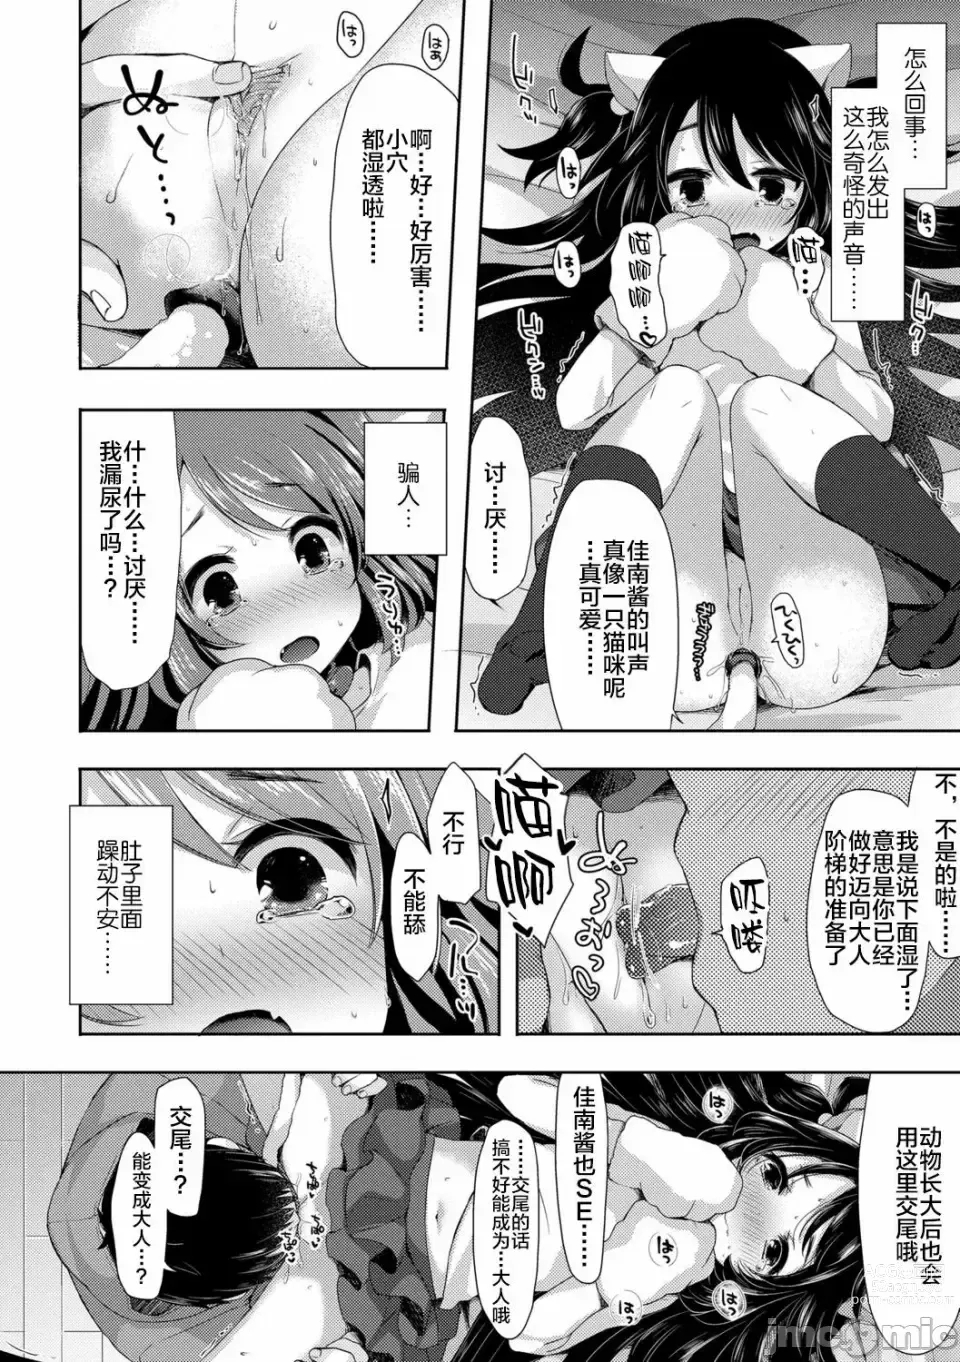 Page 13 of manga 喵喵驚喜!